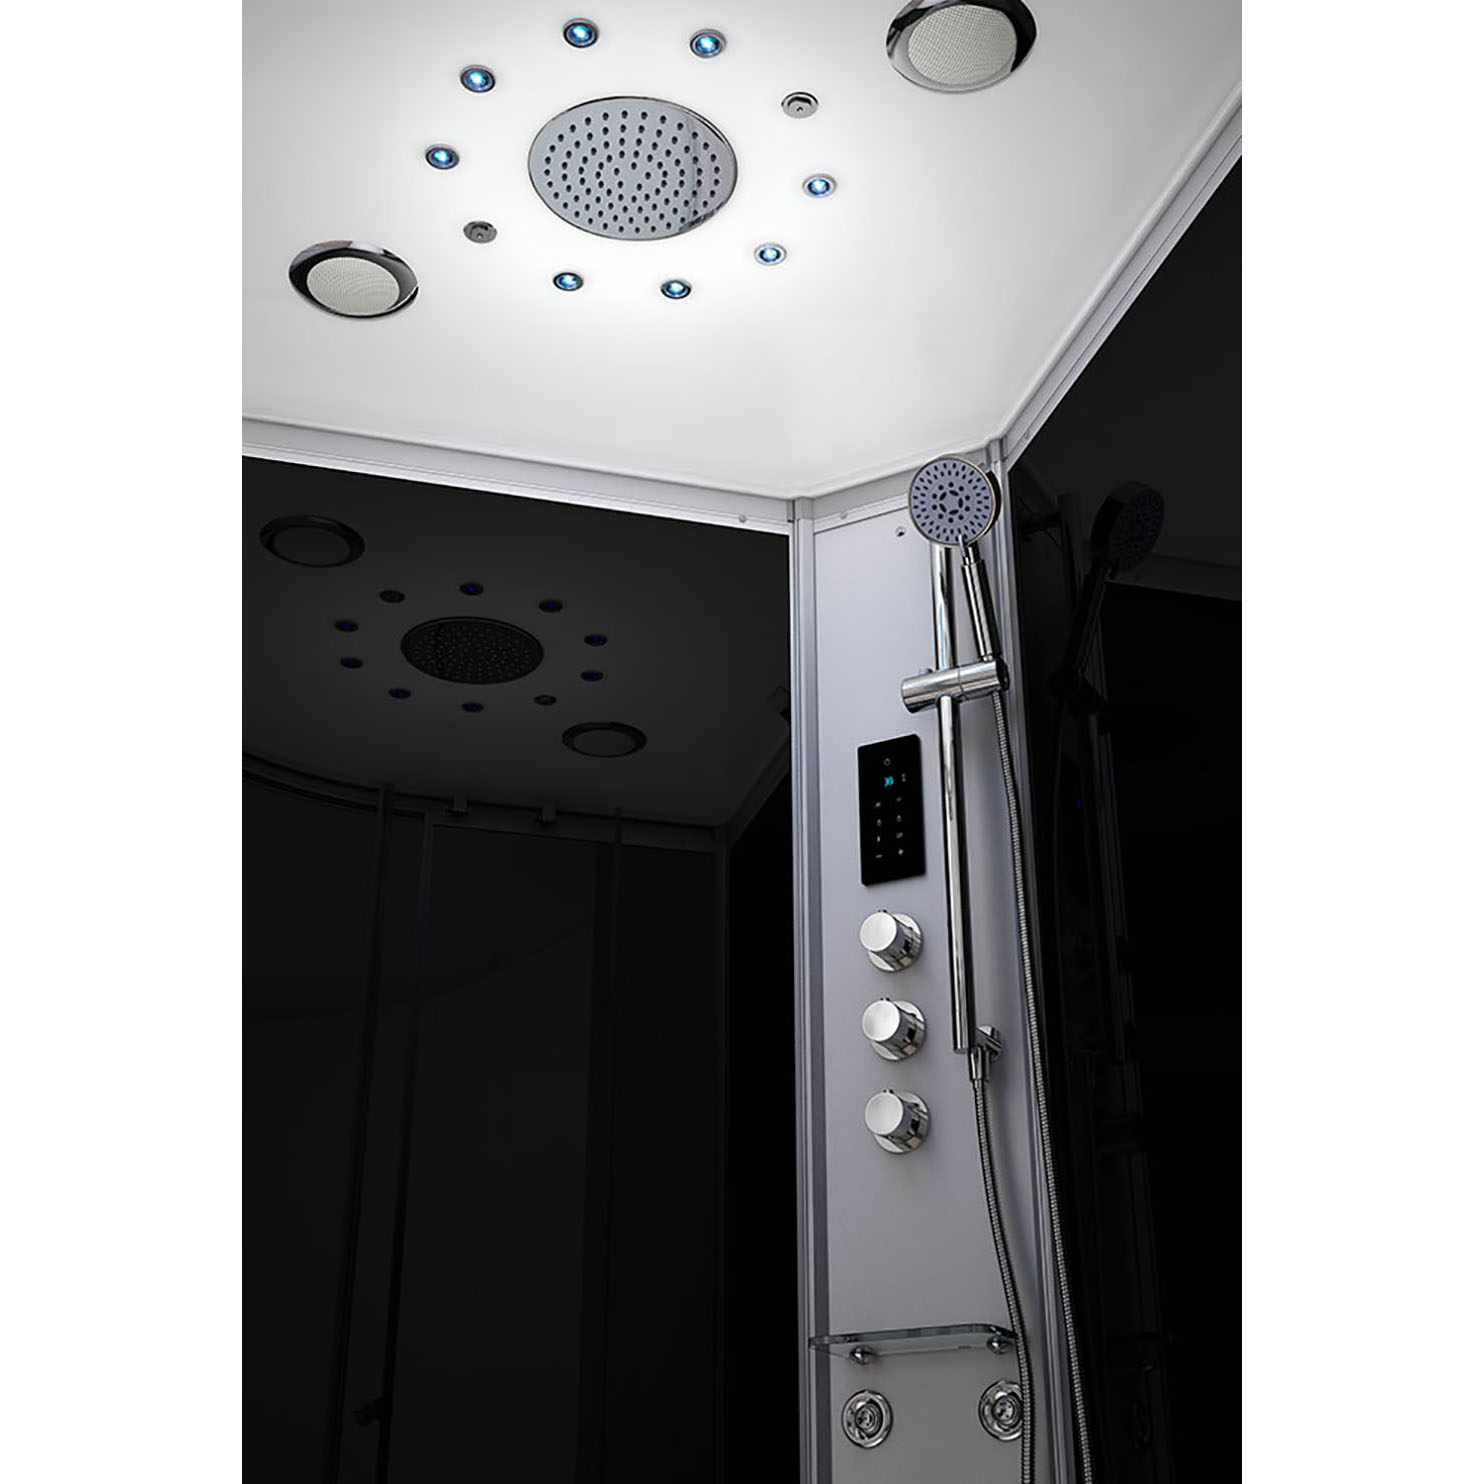 M-SPA - Biely sprchovací box s hydromasážou a parnou saunou 120 x 80 x 217 cm